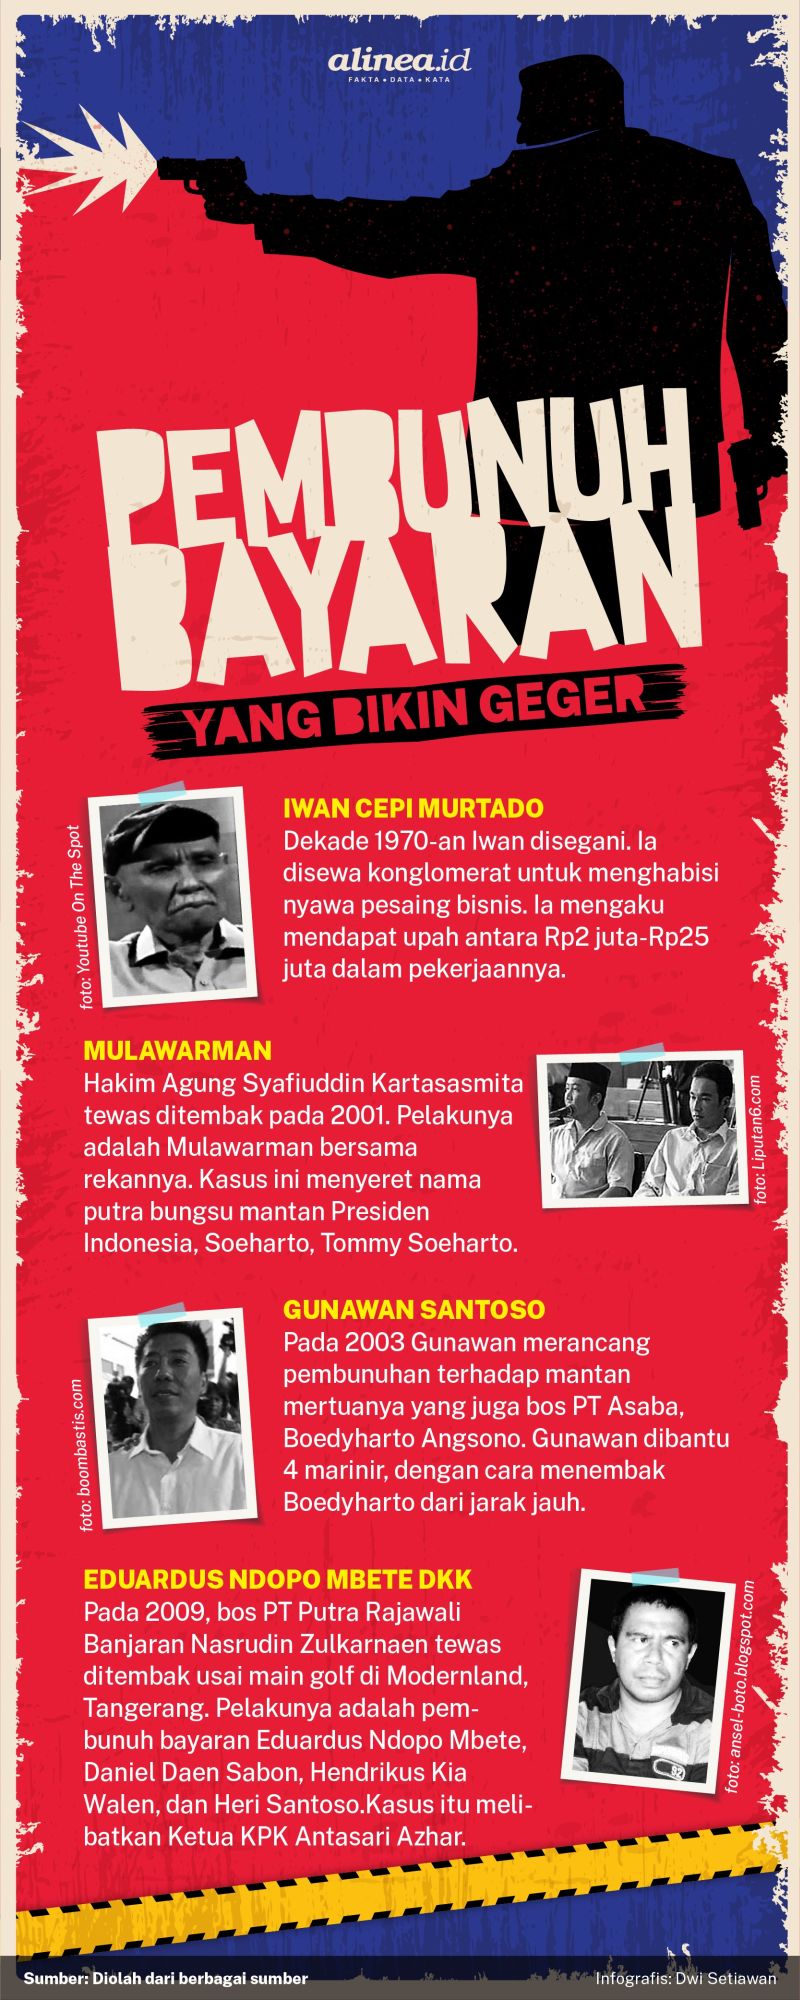 Infografik pembunuh bayaran. Alinea.id/Dwi Setiawan.